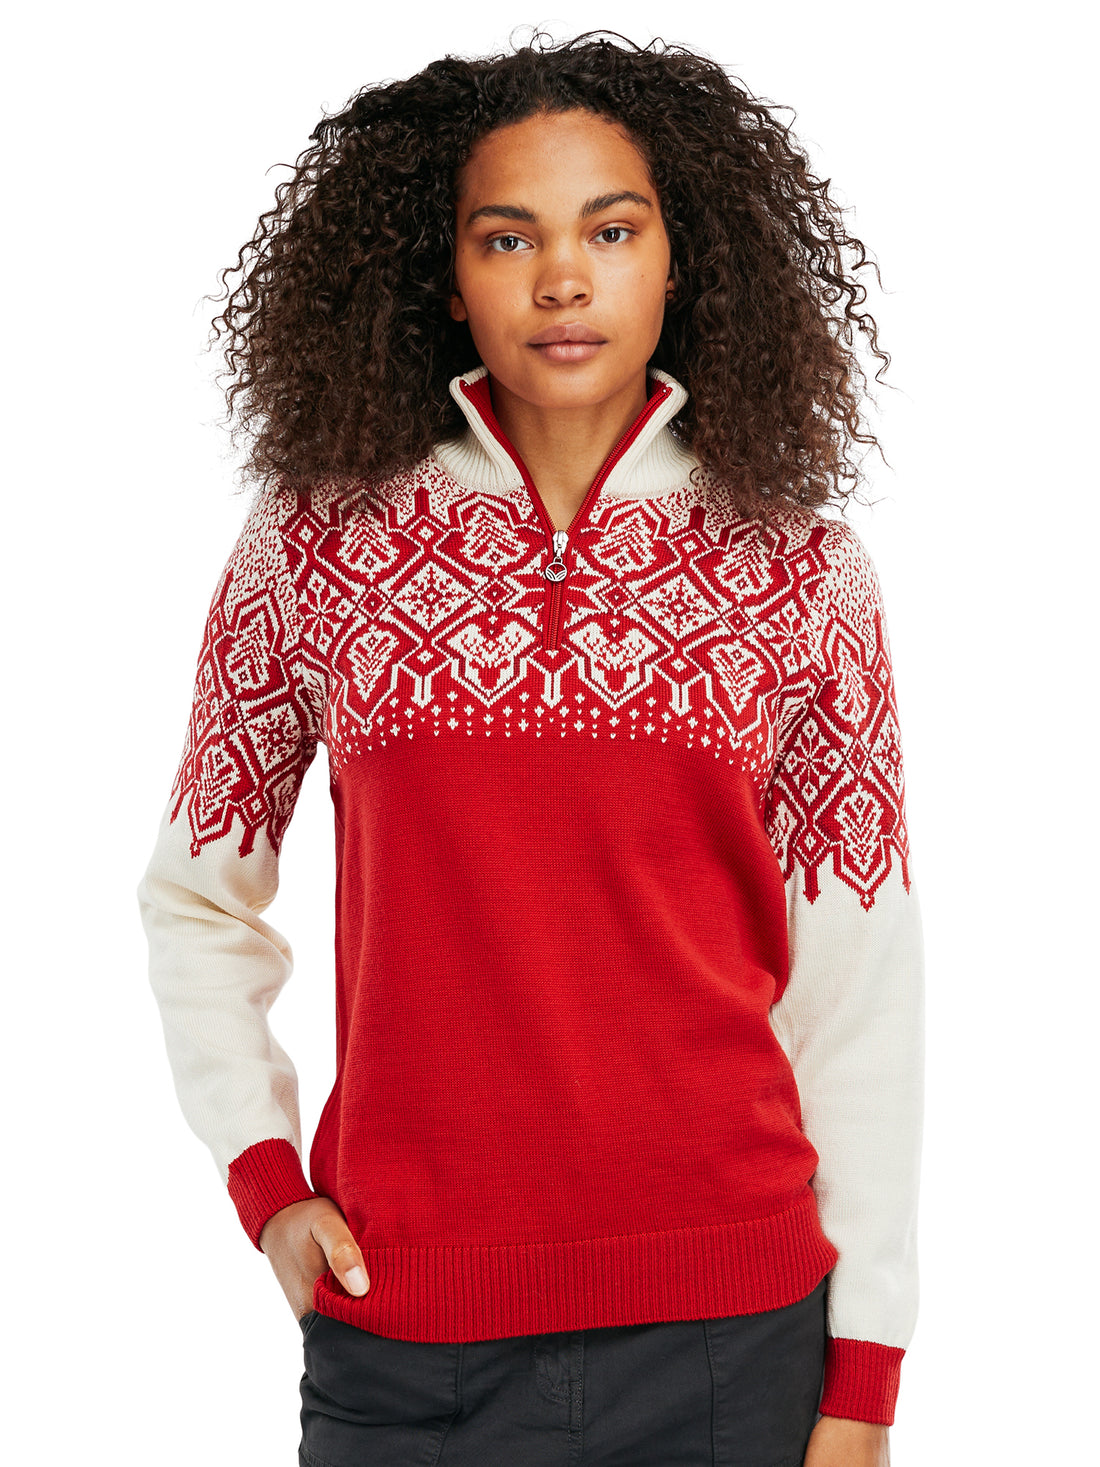 Dale of Norway - Winterland Women's Sweater - Raspberry